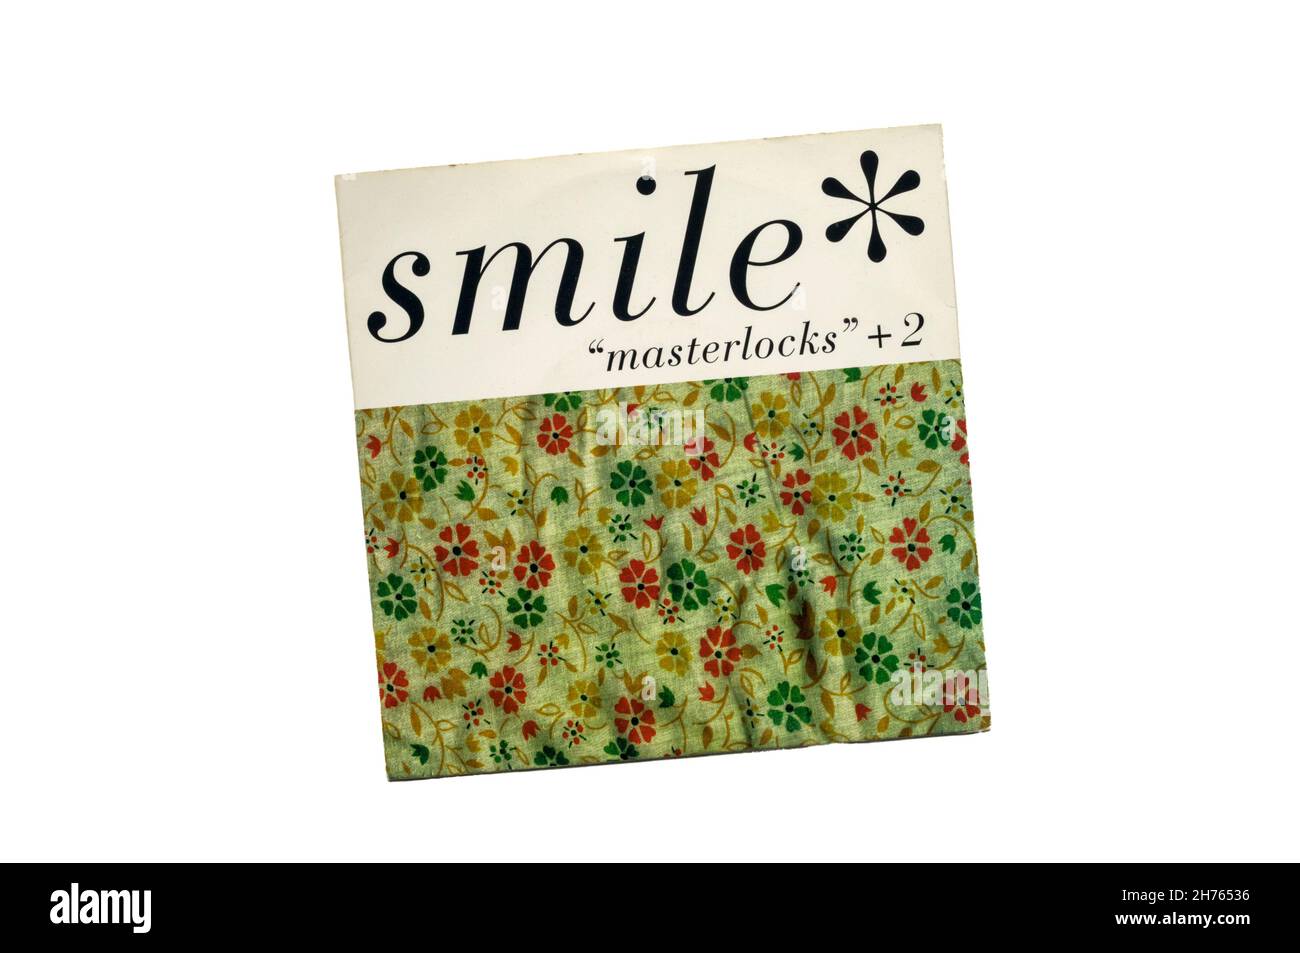 1996 7' single, 'Masterlocks' +2 by American alternative rock band Smile. Stock Photo